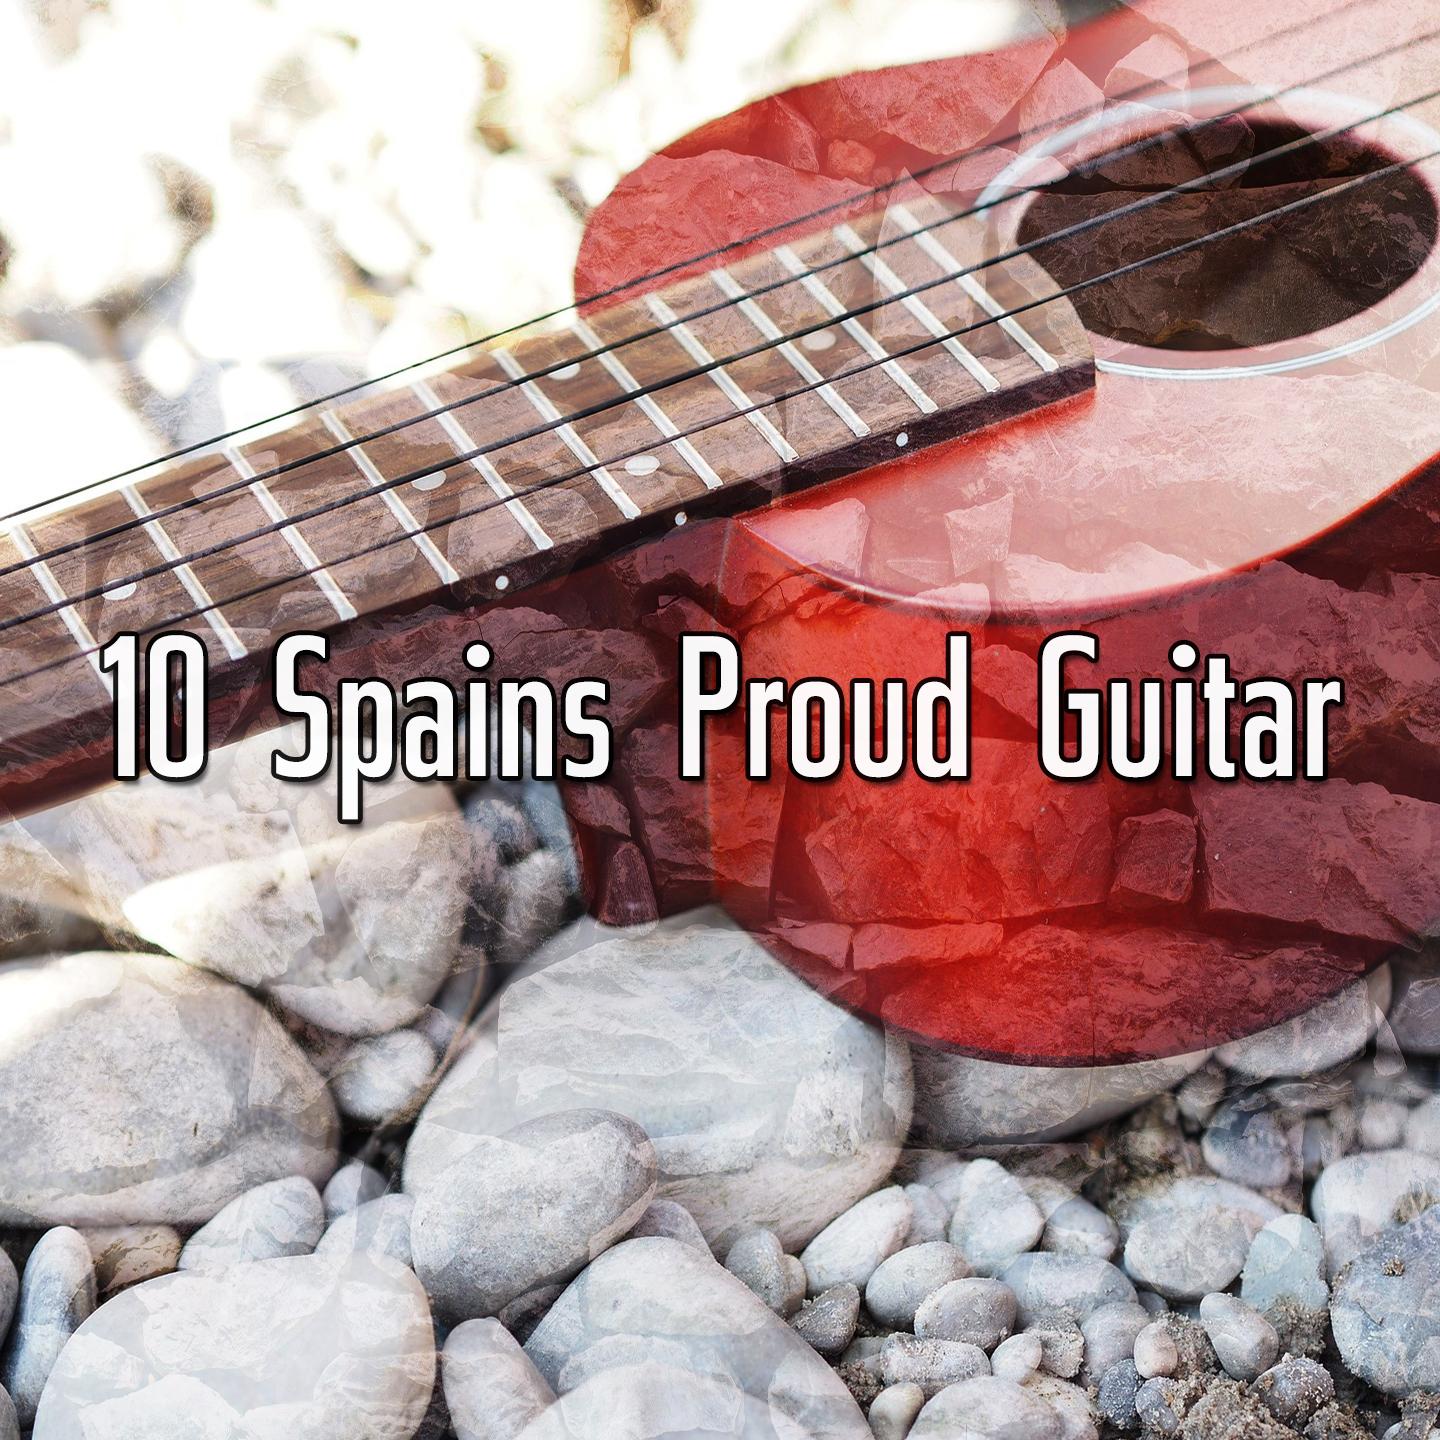 10 Spains Proud Guitar